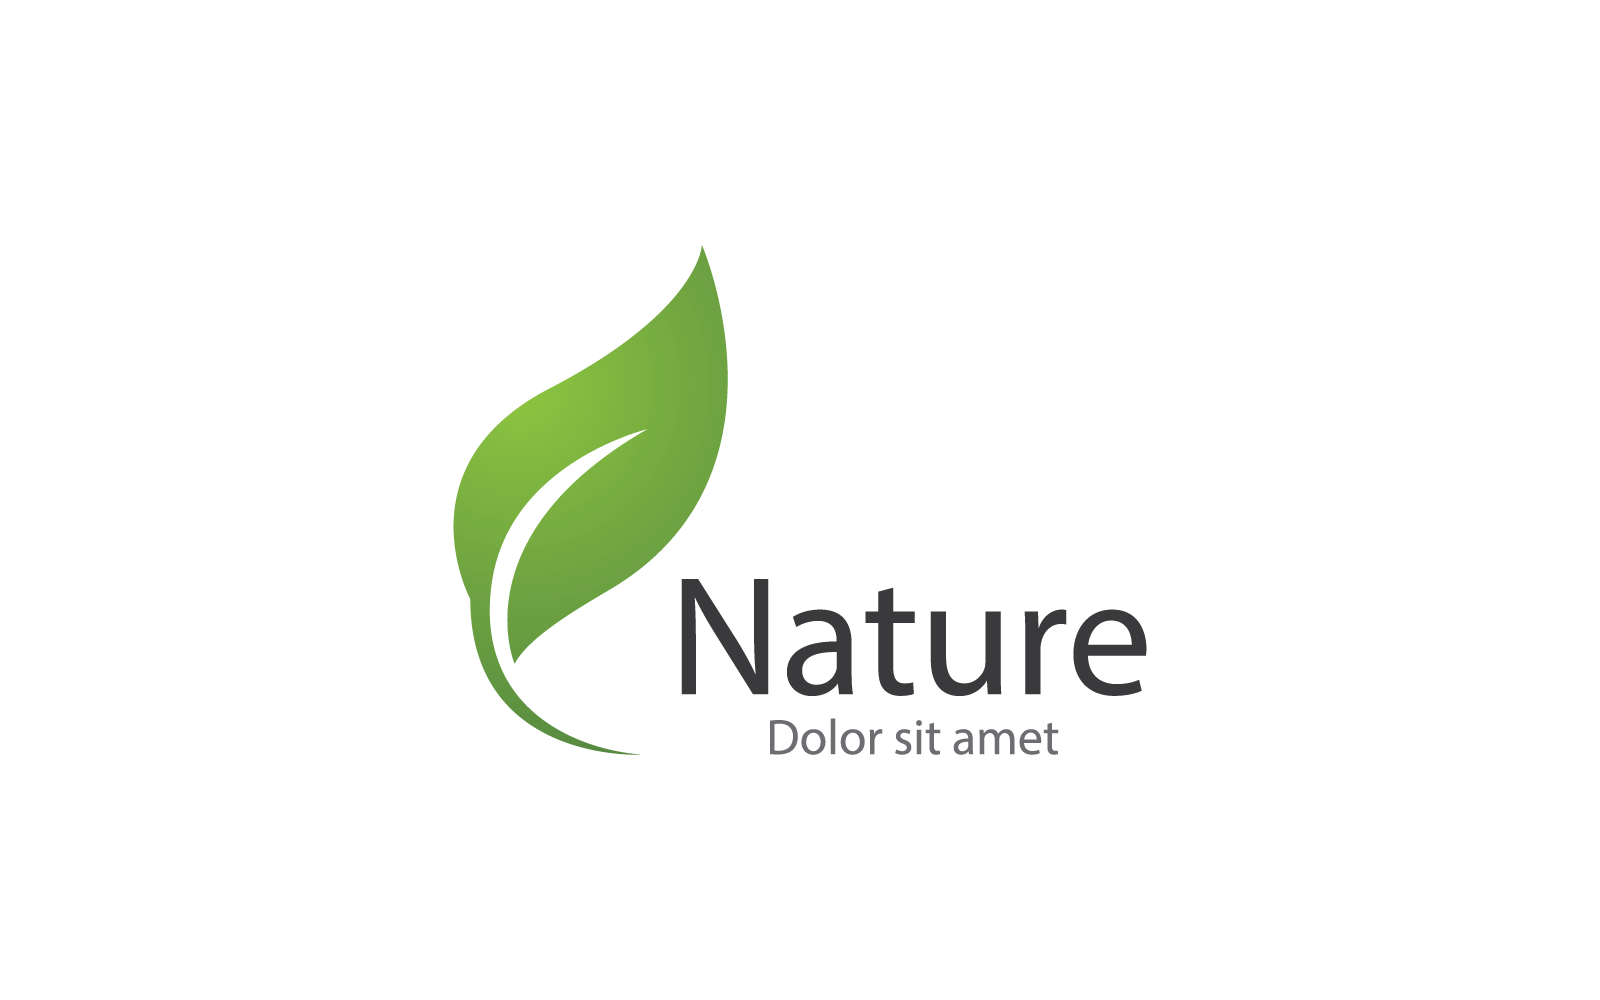 Green leaf nature logo flat design template